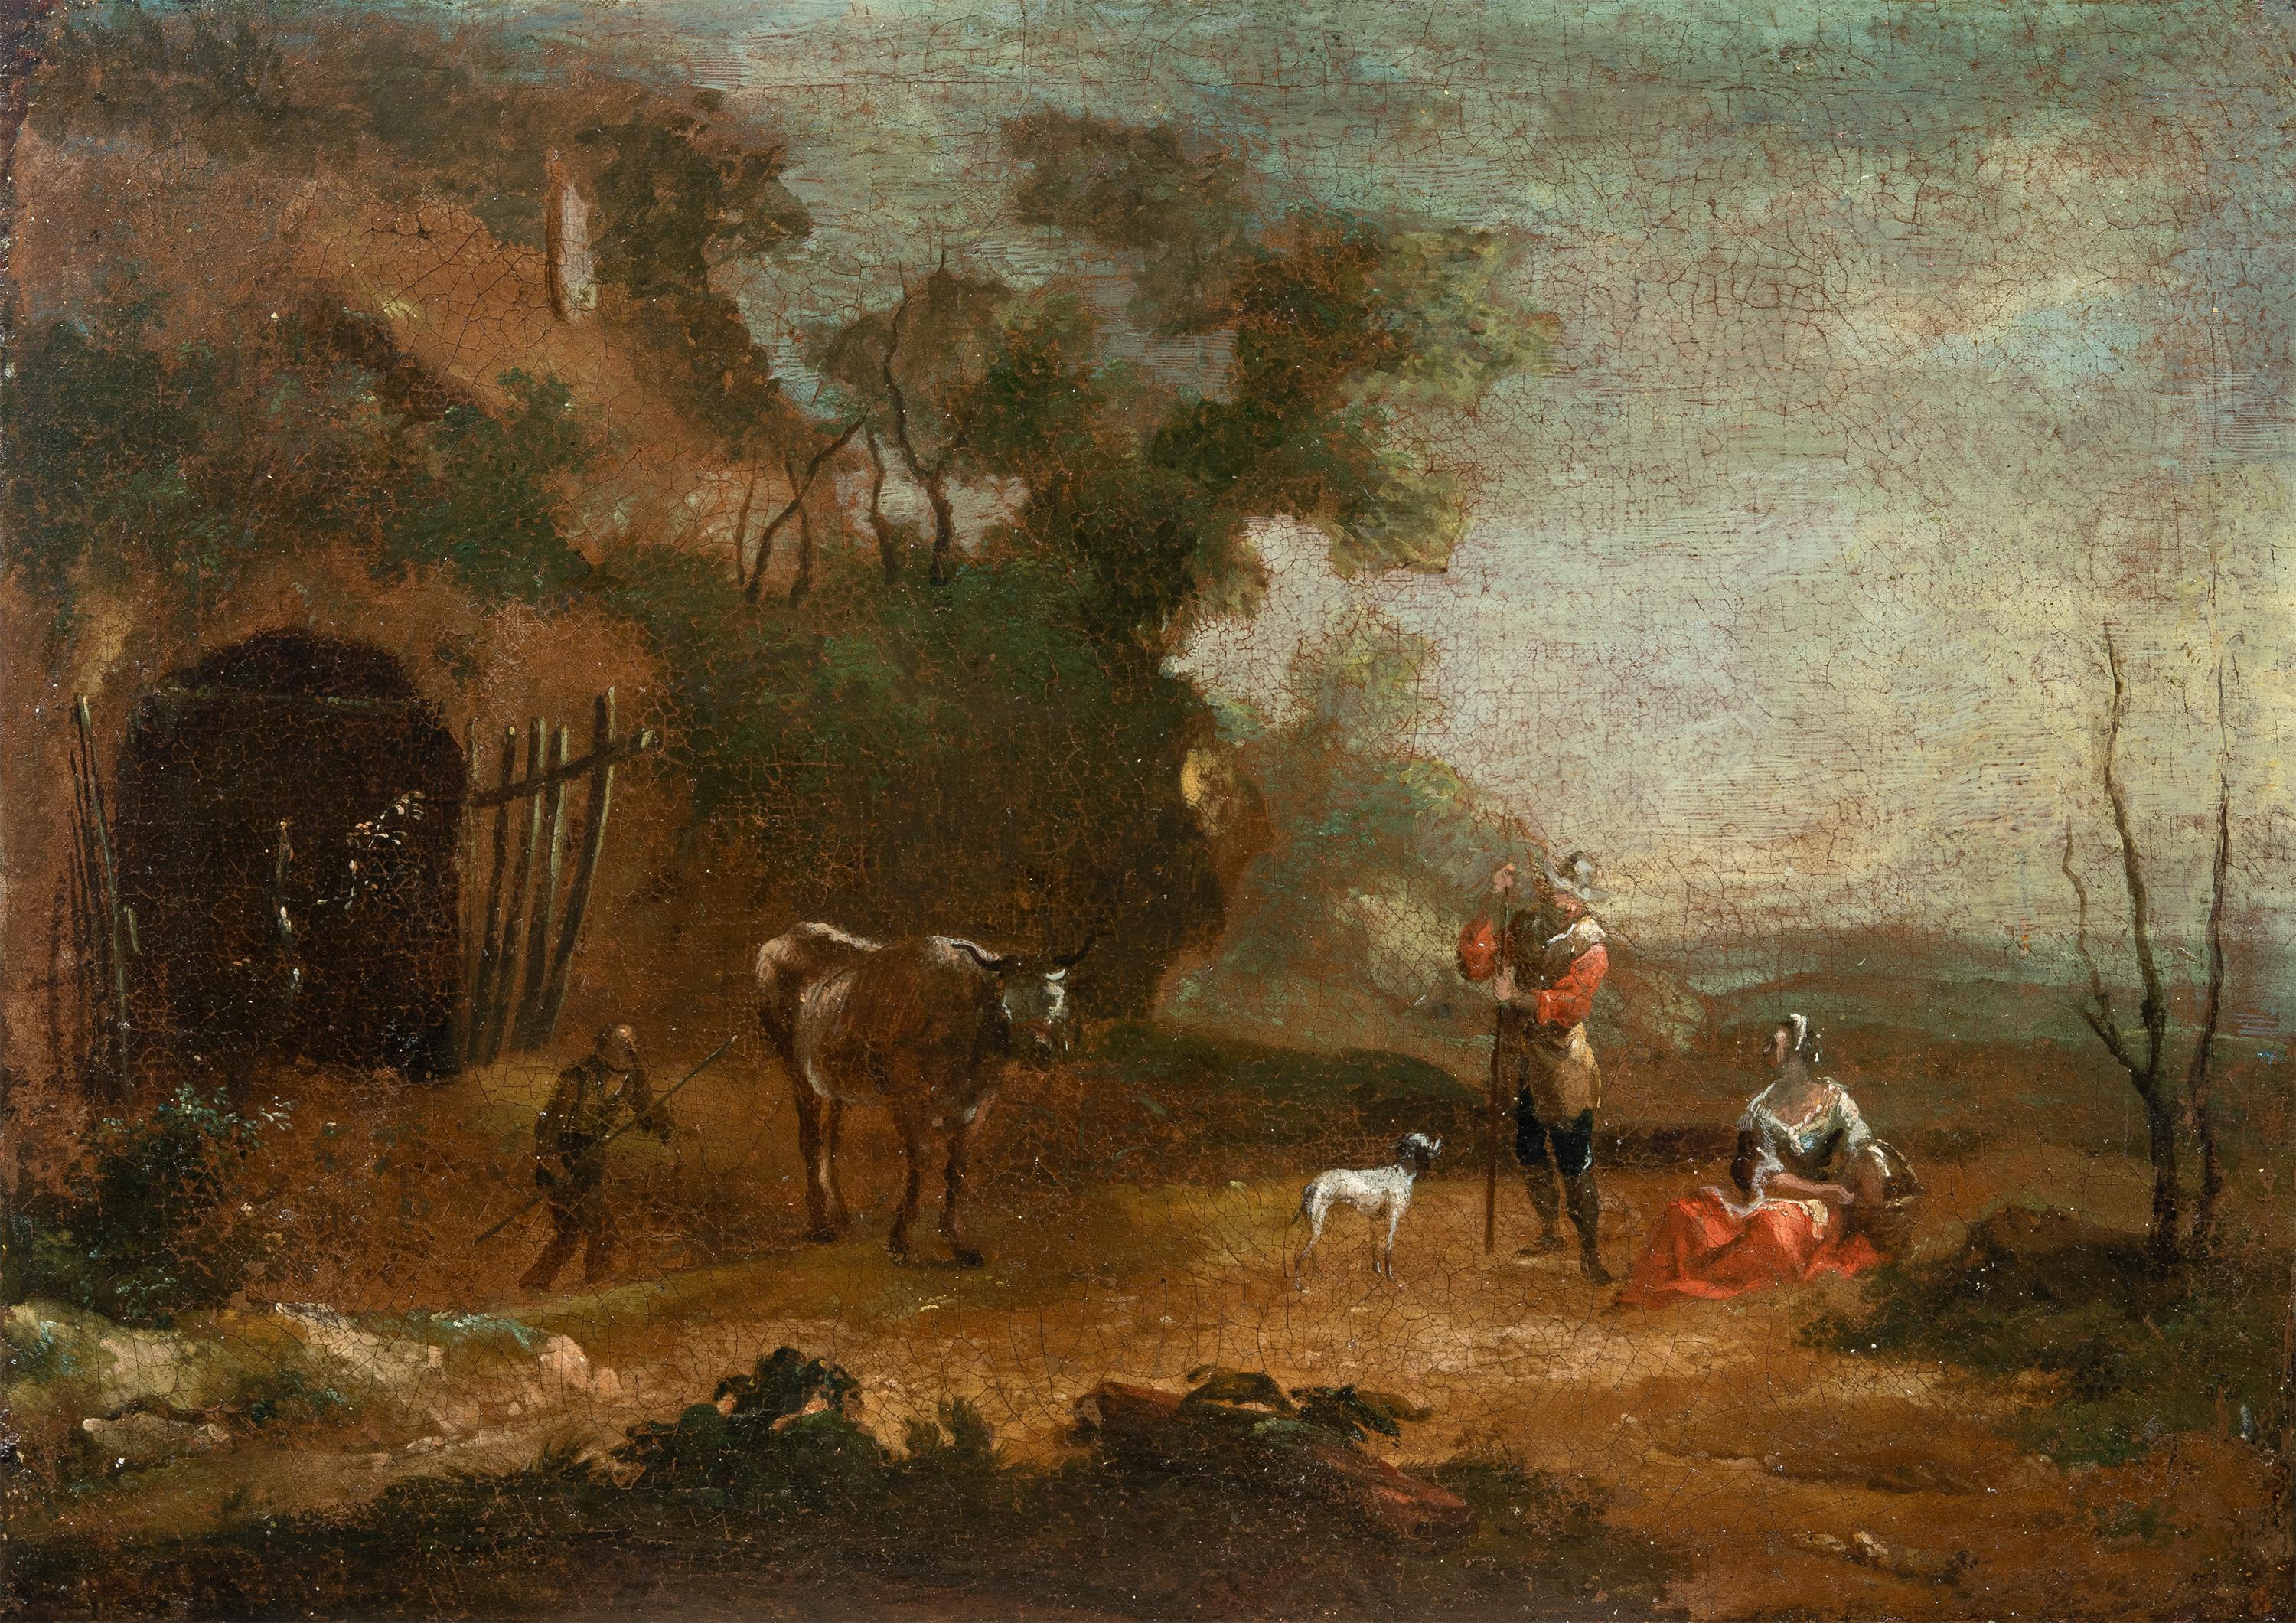 Unknown Landscape Painting - Antique Italian painter - 18th century landscape painting figures- Oil on canvas